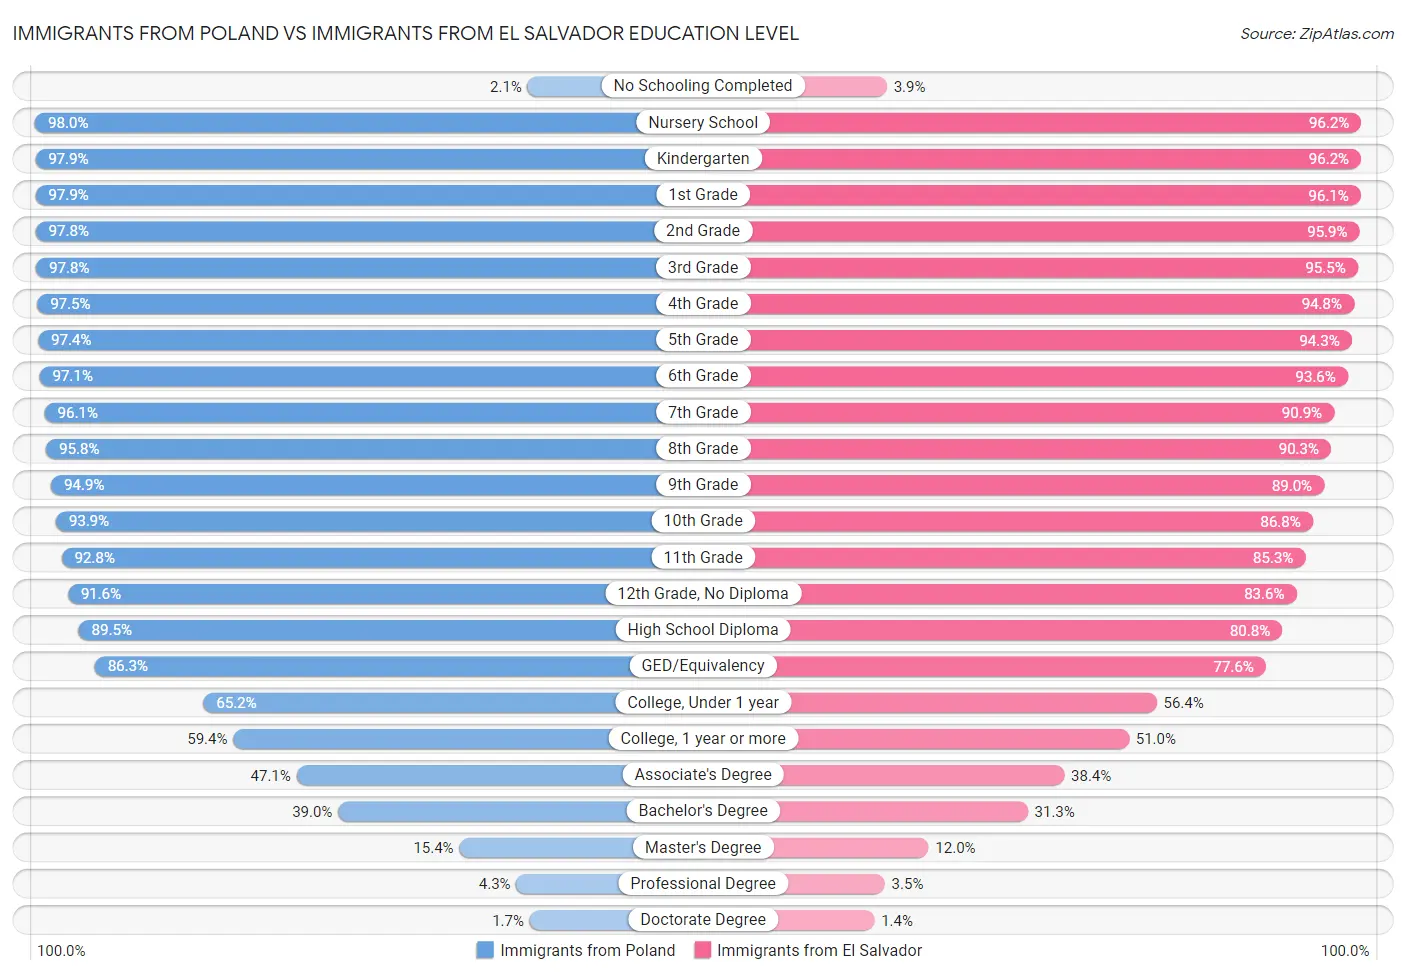 Immigrants from Poland vs Immigrants from El Salvador Education Level